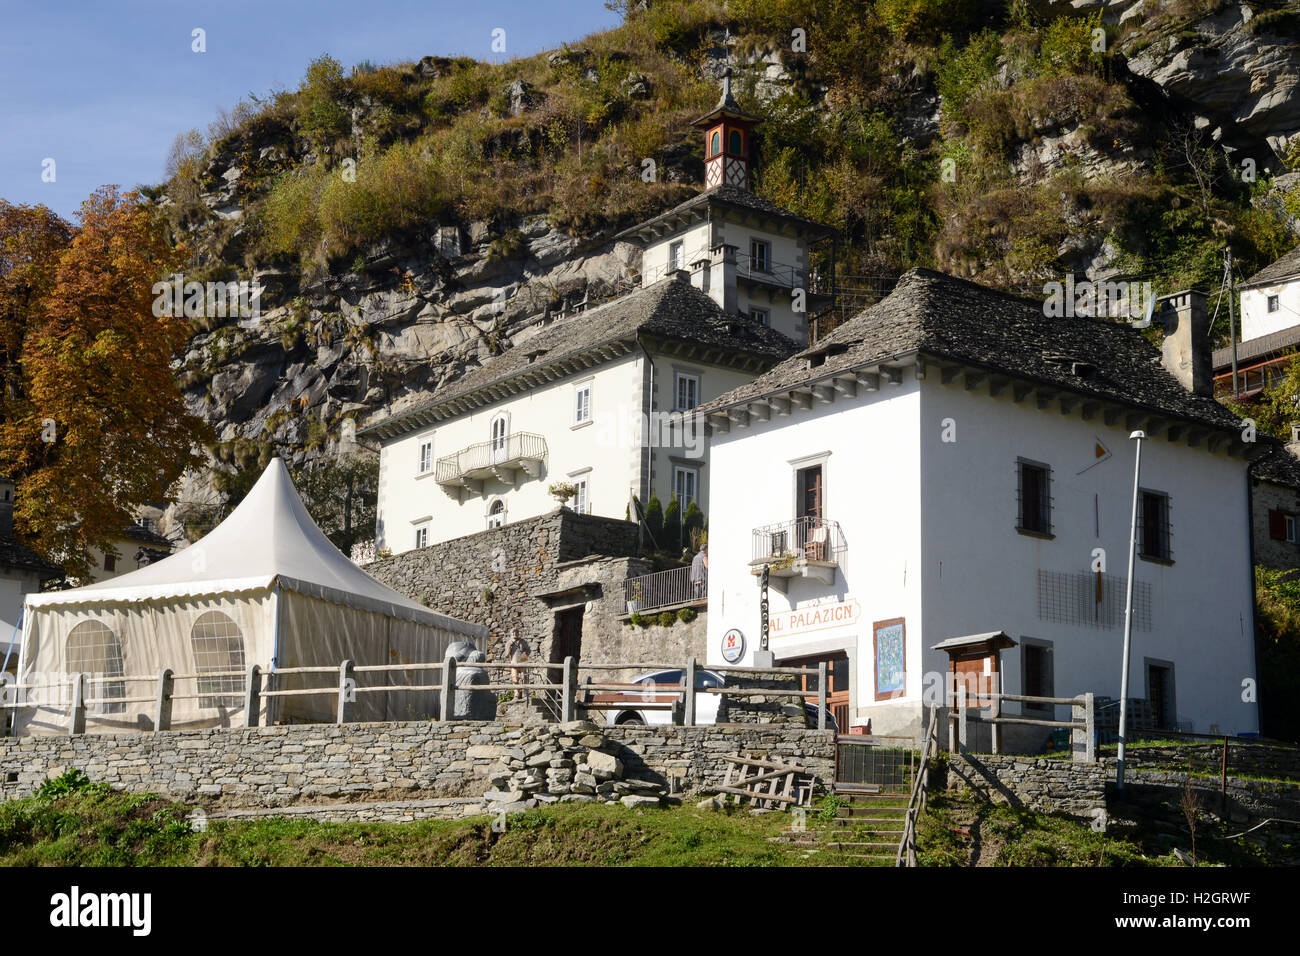 The rural village of Comologno on Onsernone valley, Switzerland Stock Photo